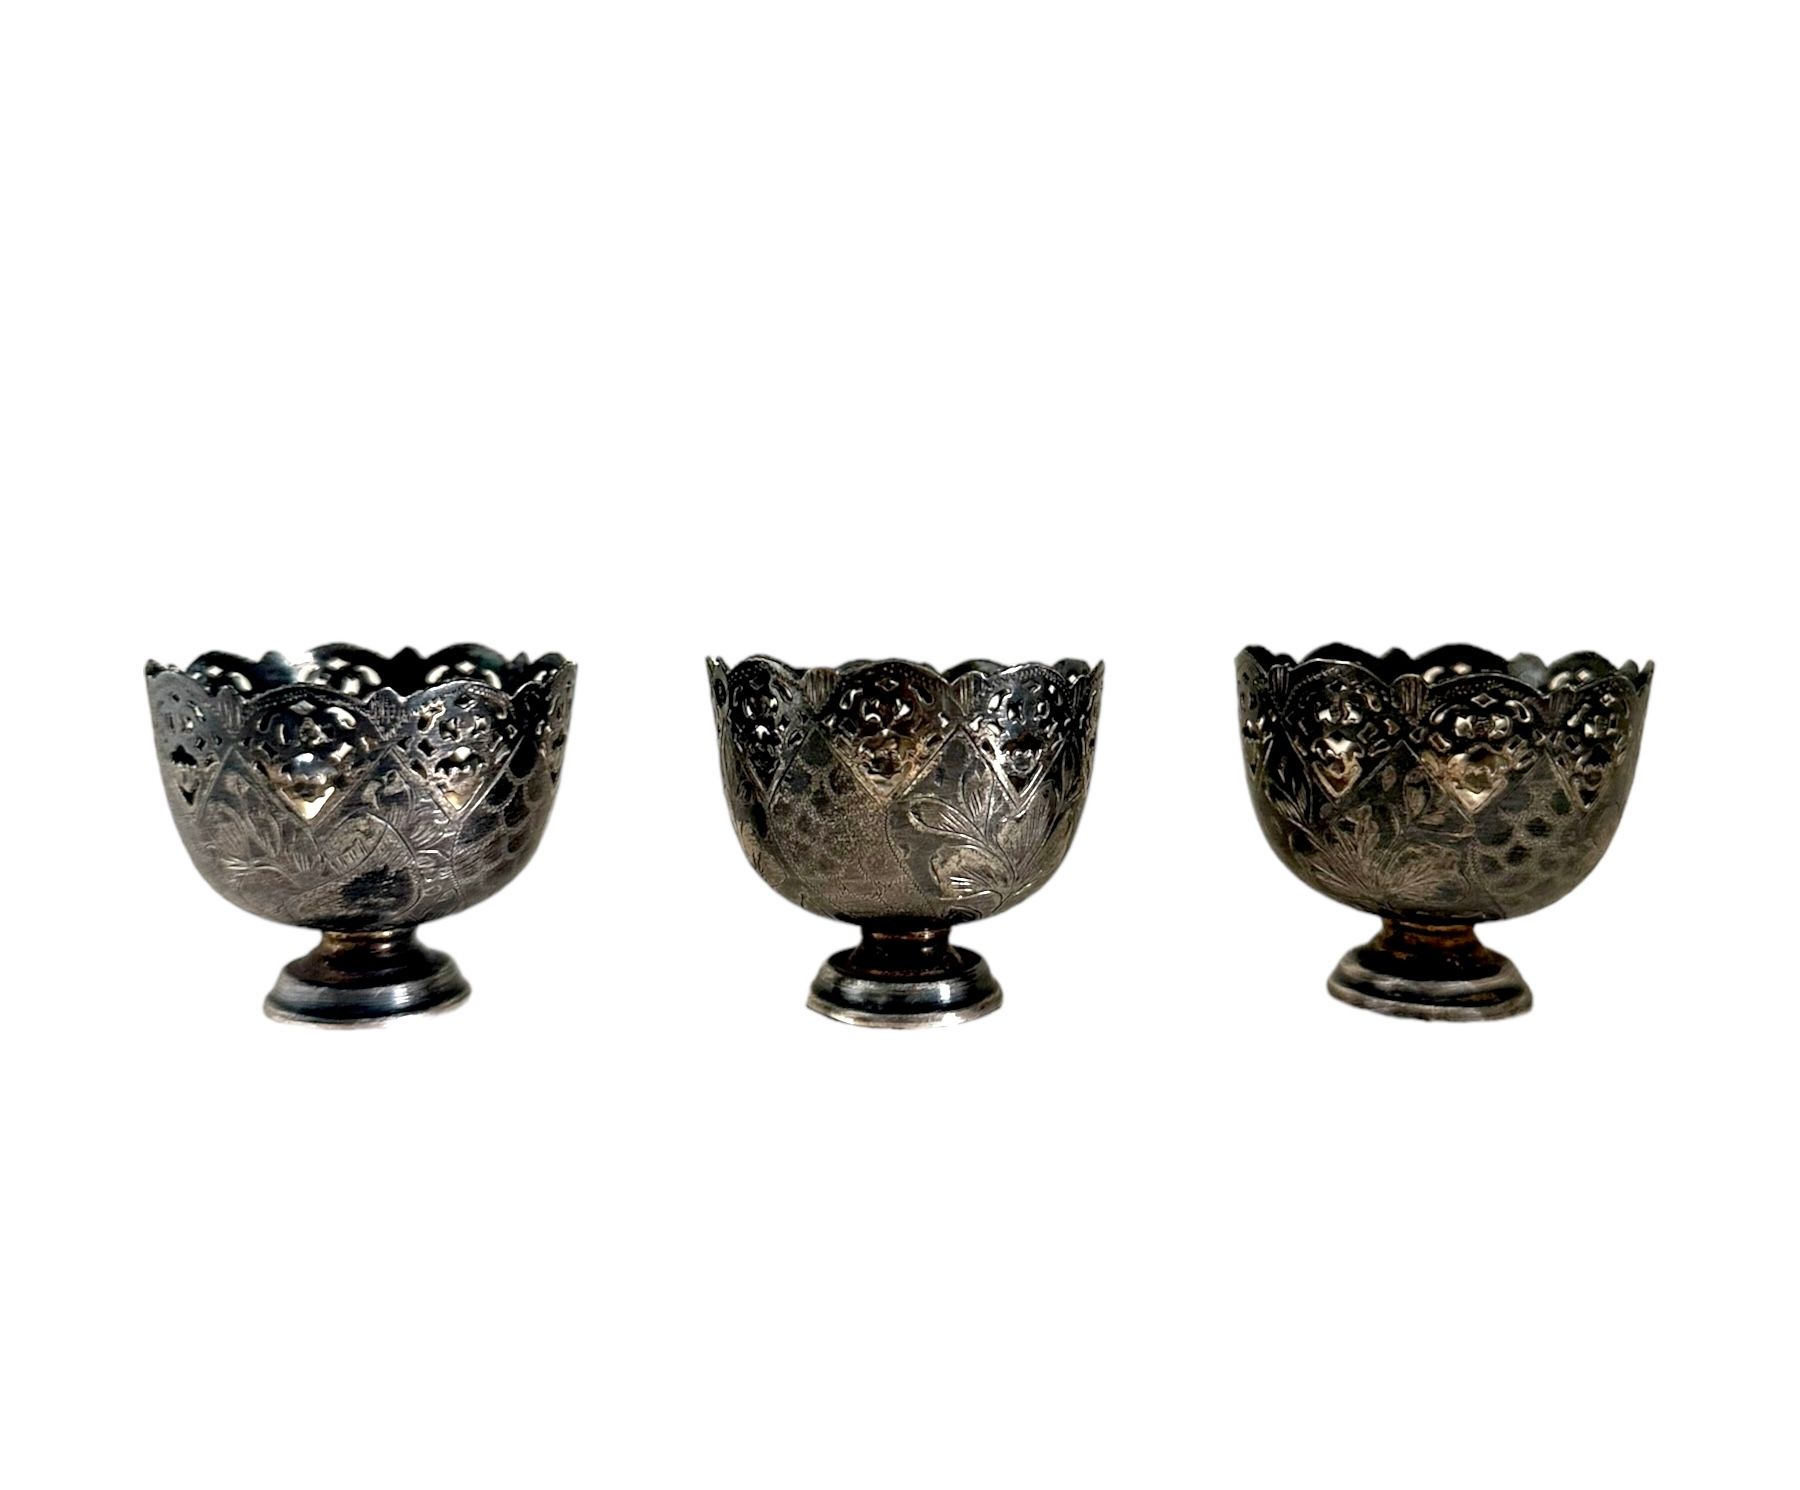 Three Ottoman Tugra Silver Zarf Cups Trois tasses à café en argent, zarf avec bo&hellip;